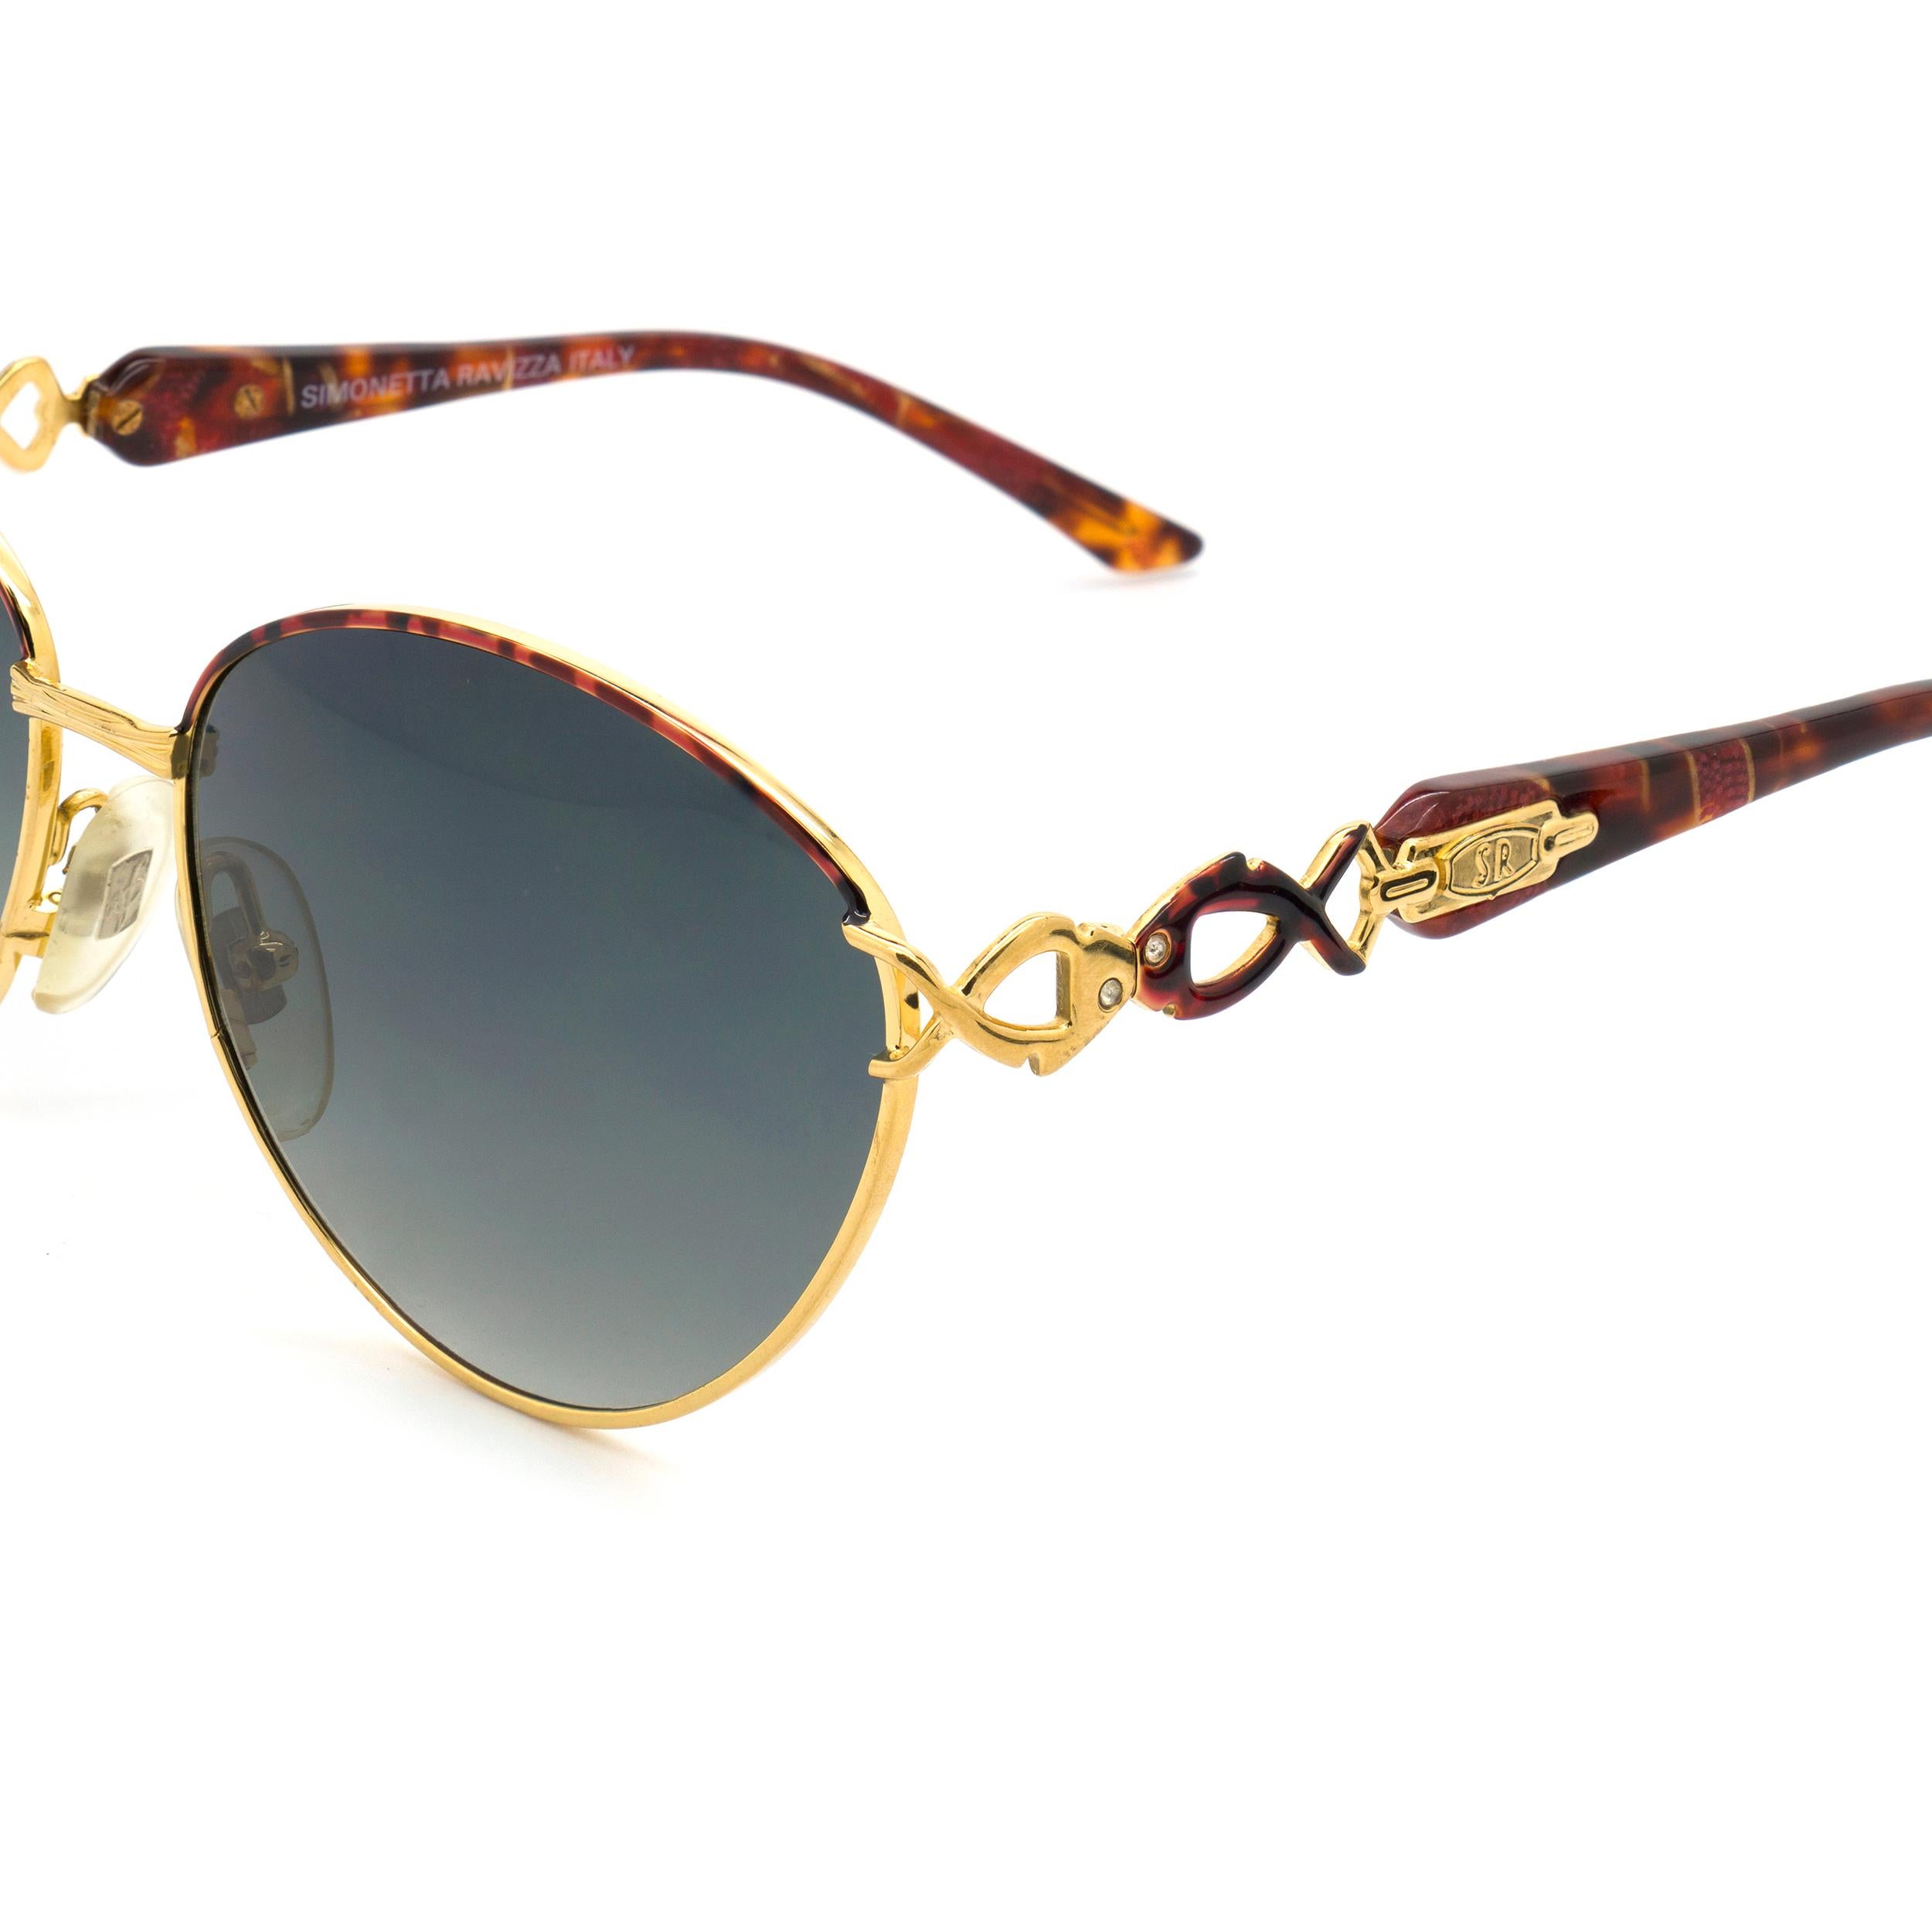 Gray Simonetta Ravizza jewelry vintage sunglasses